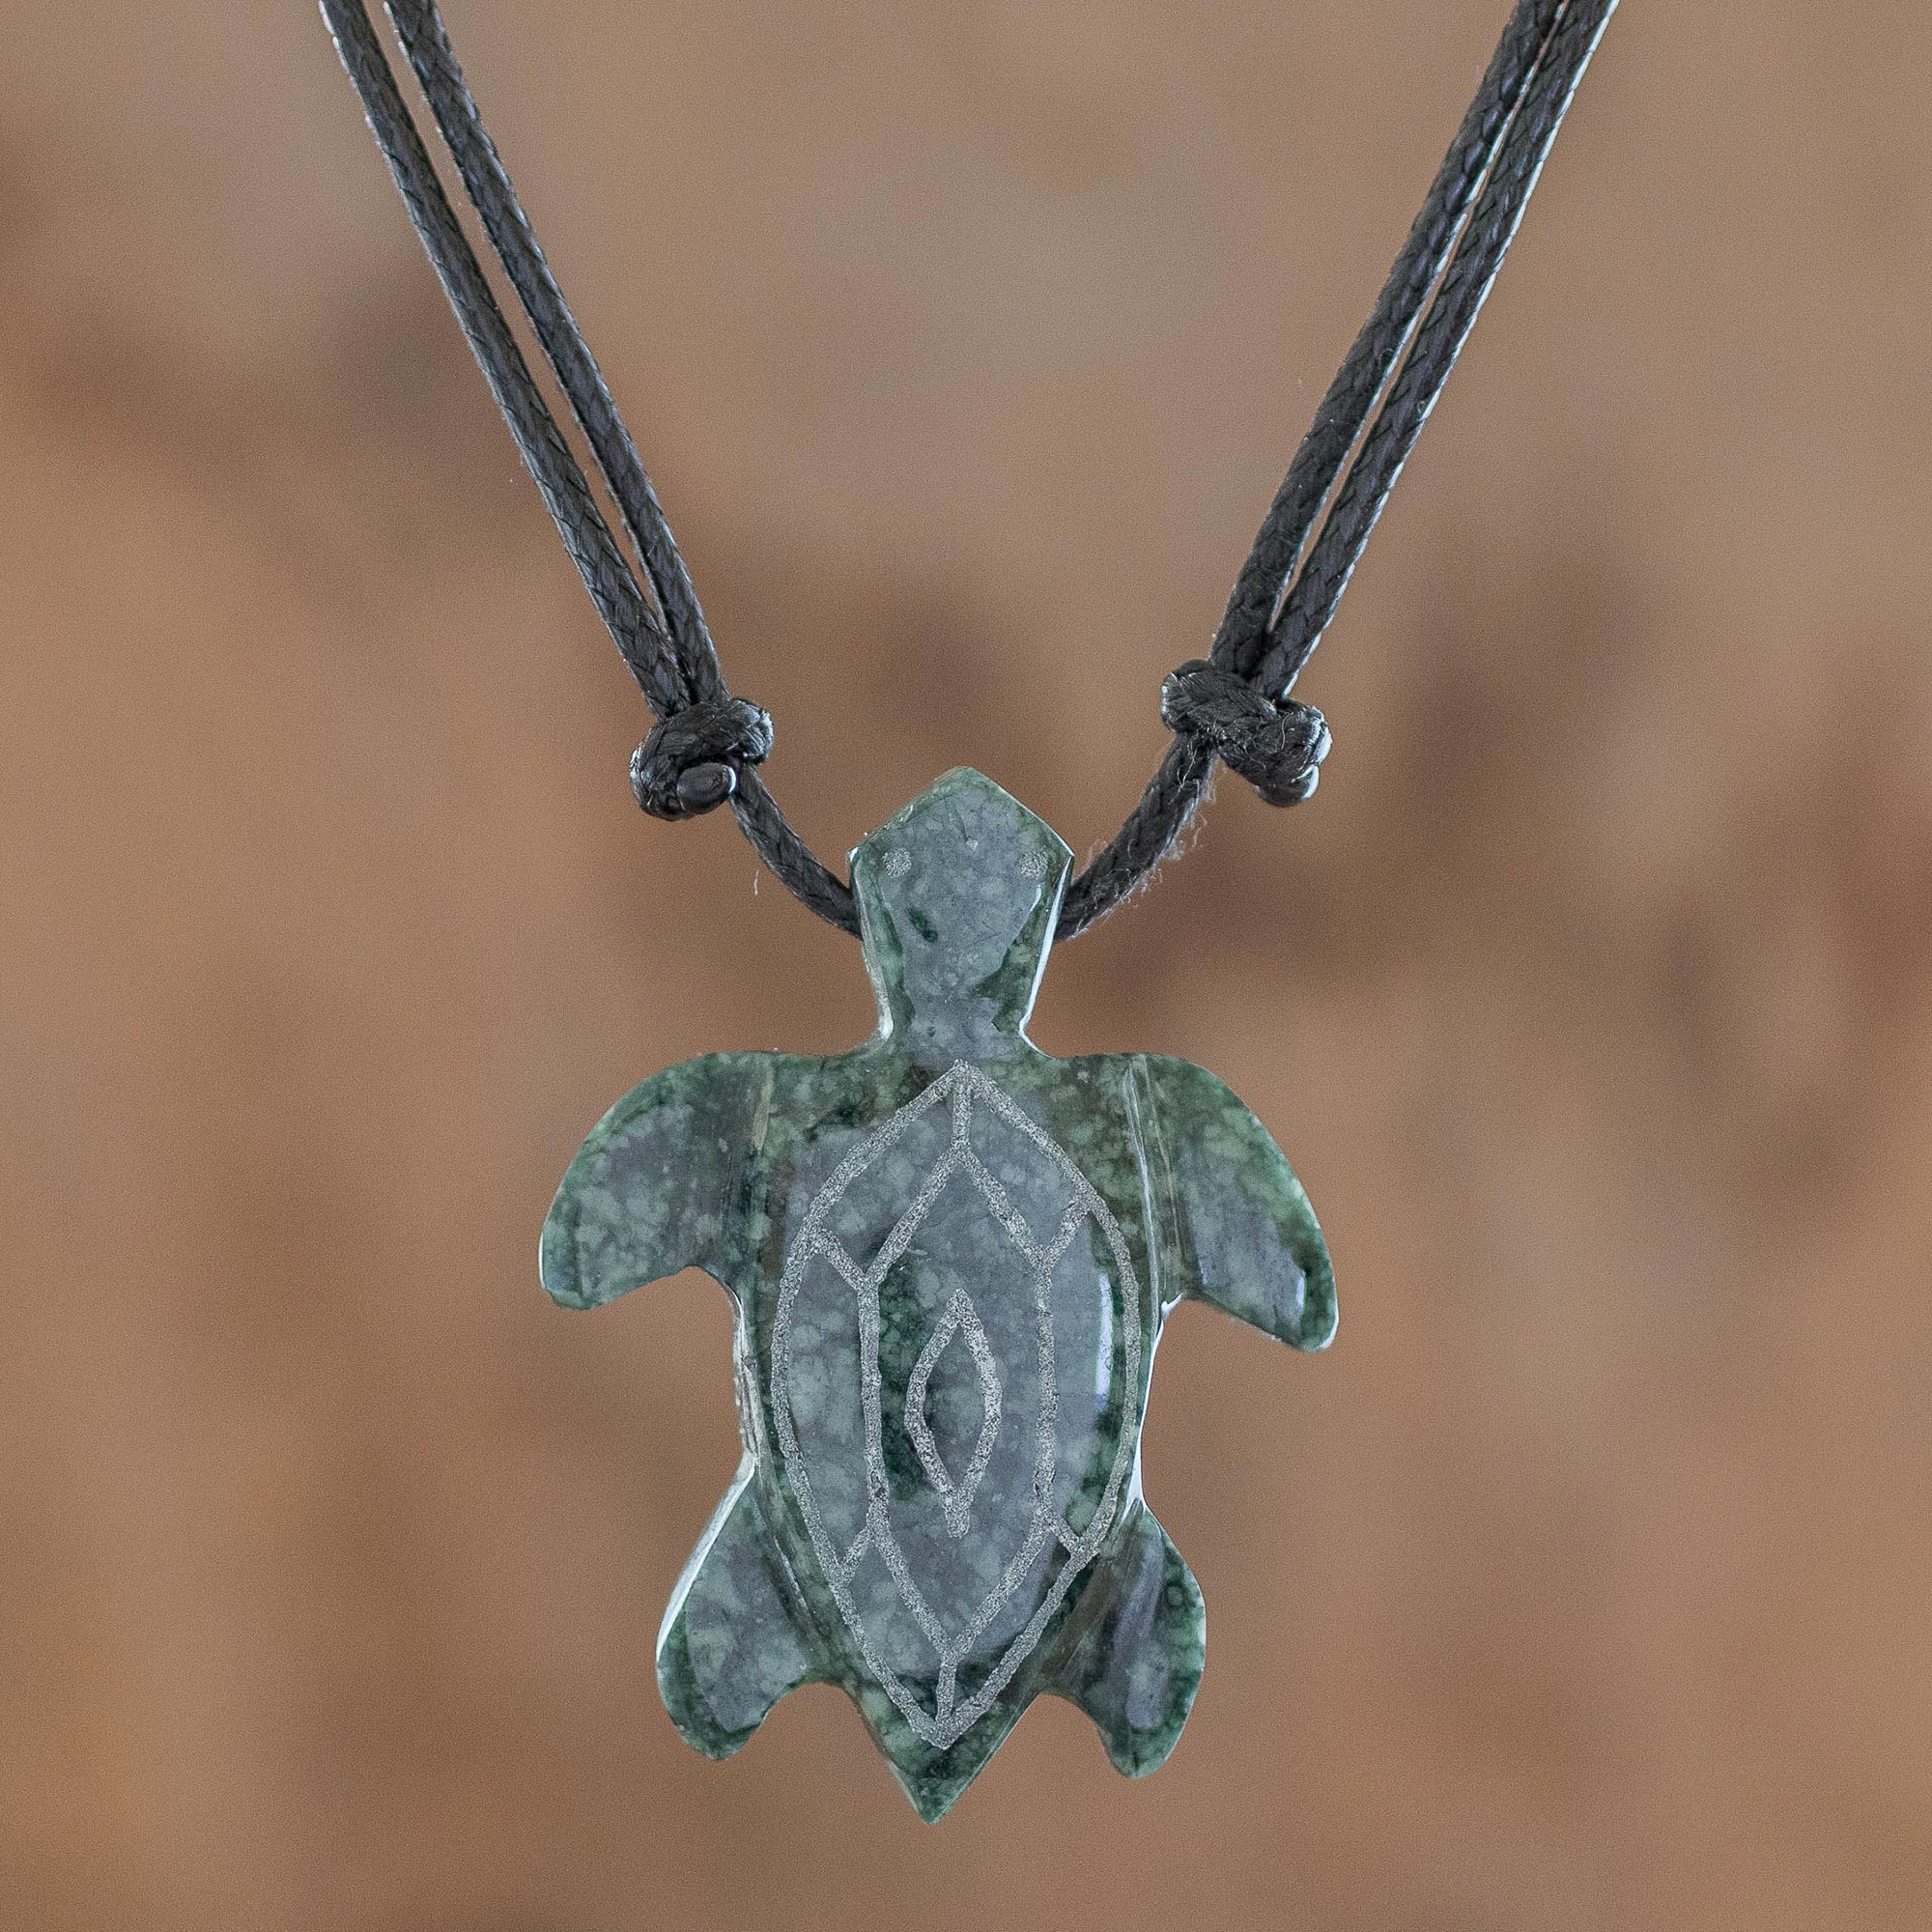 Sea turtle Necklace earring pendants jewelry,Charm Silver handmade jewelry sets